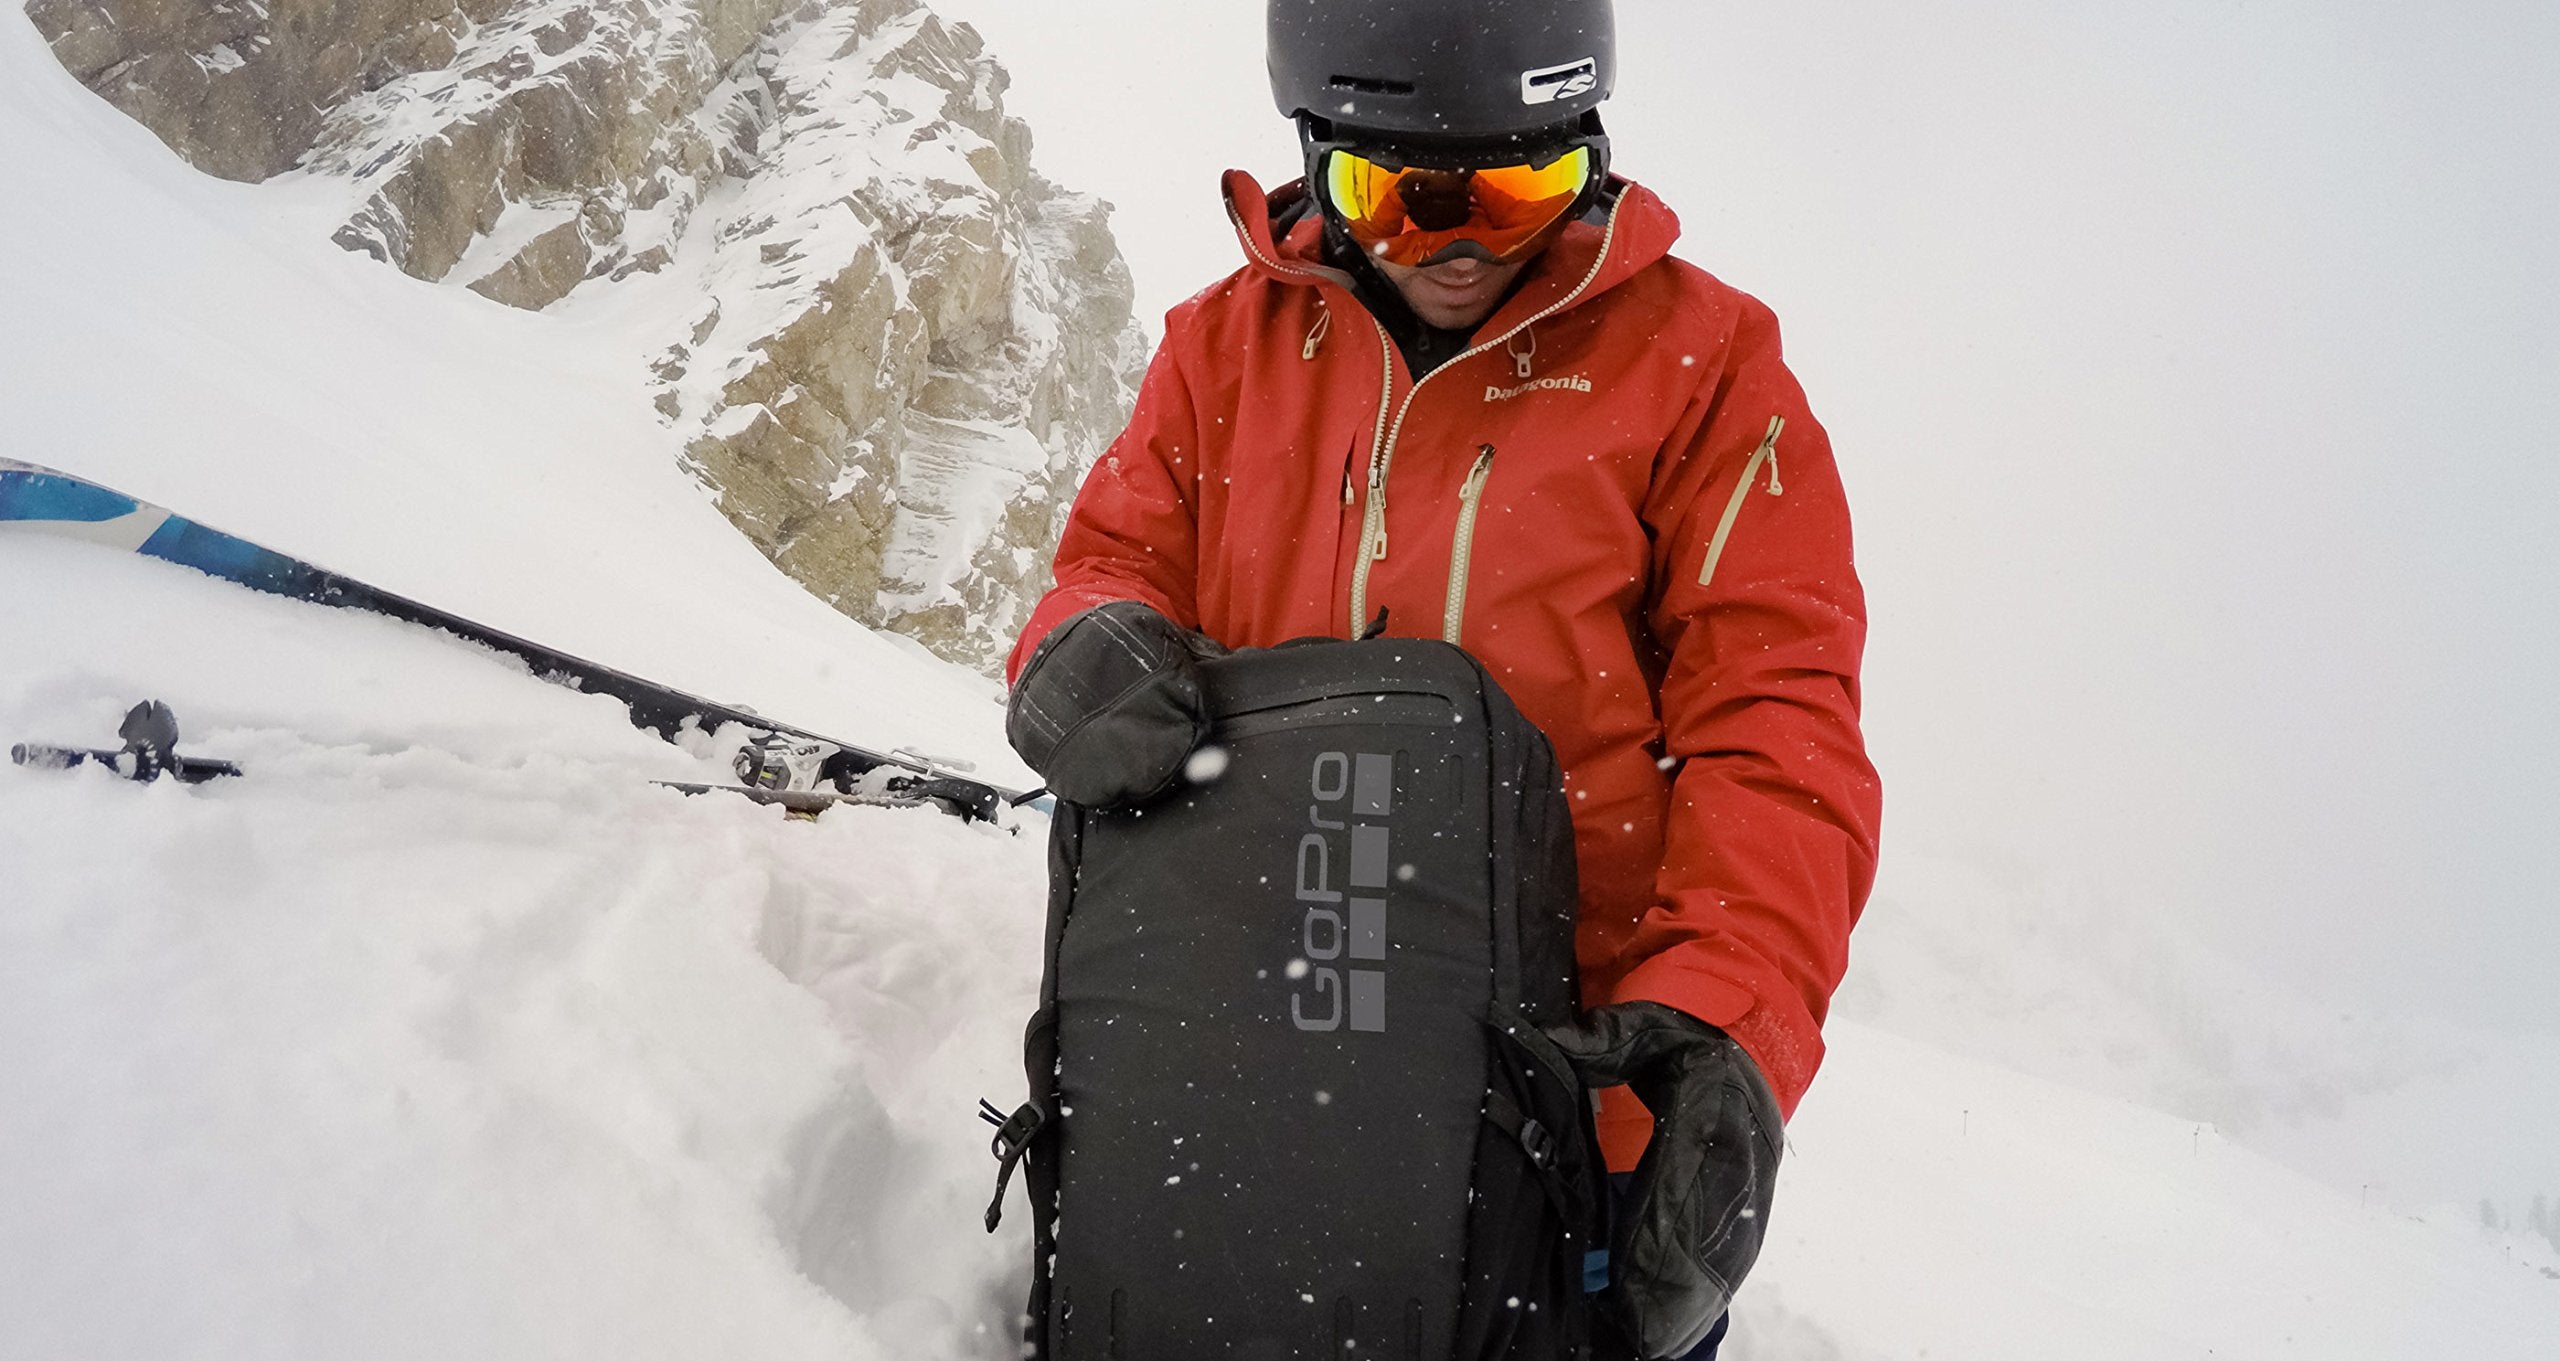 GoPro Seeker 16L Hydration-Compatible Backpack